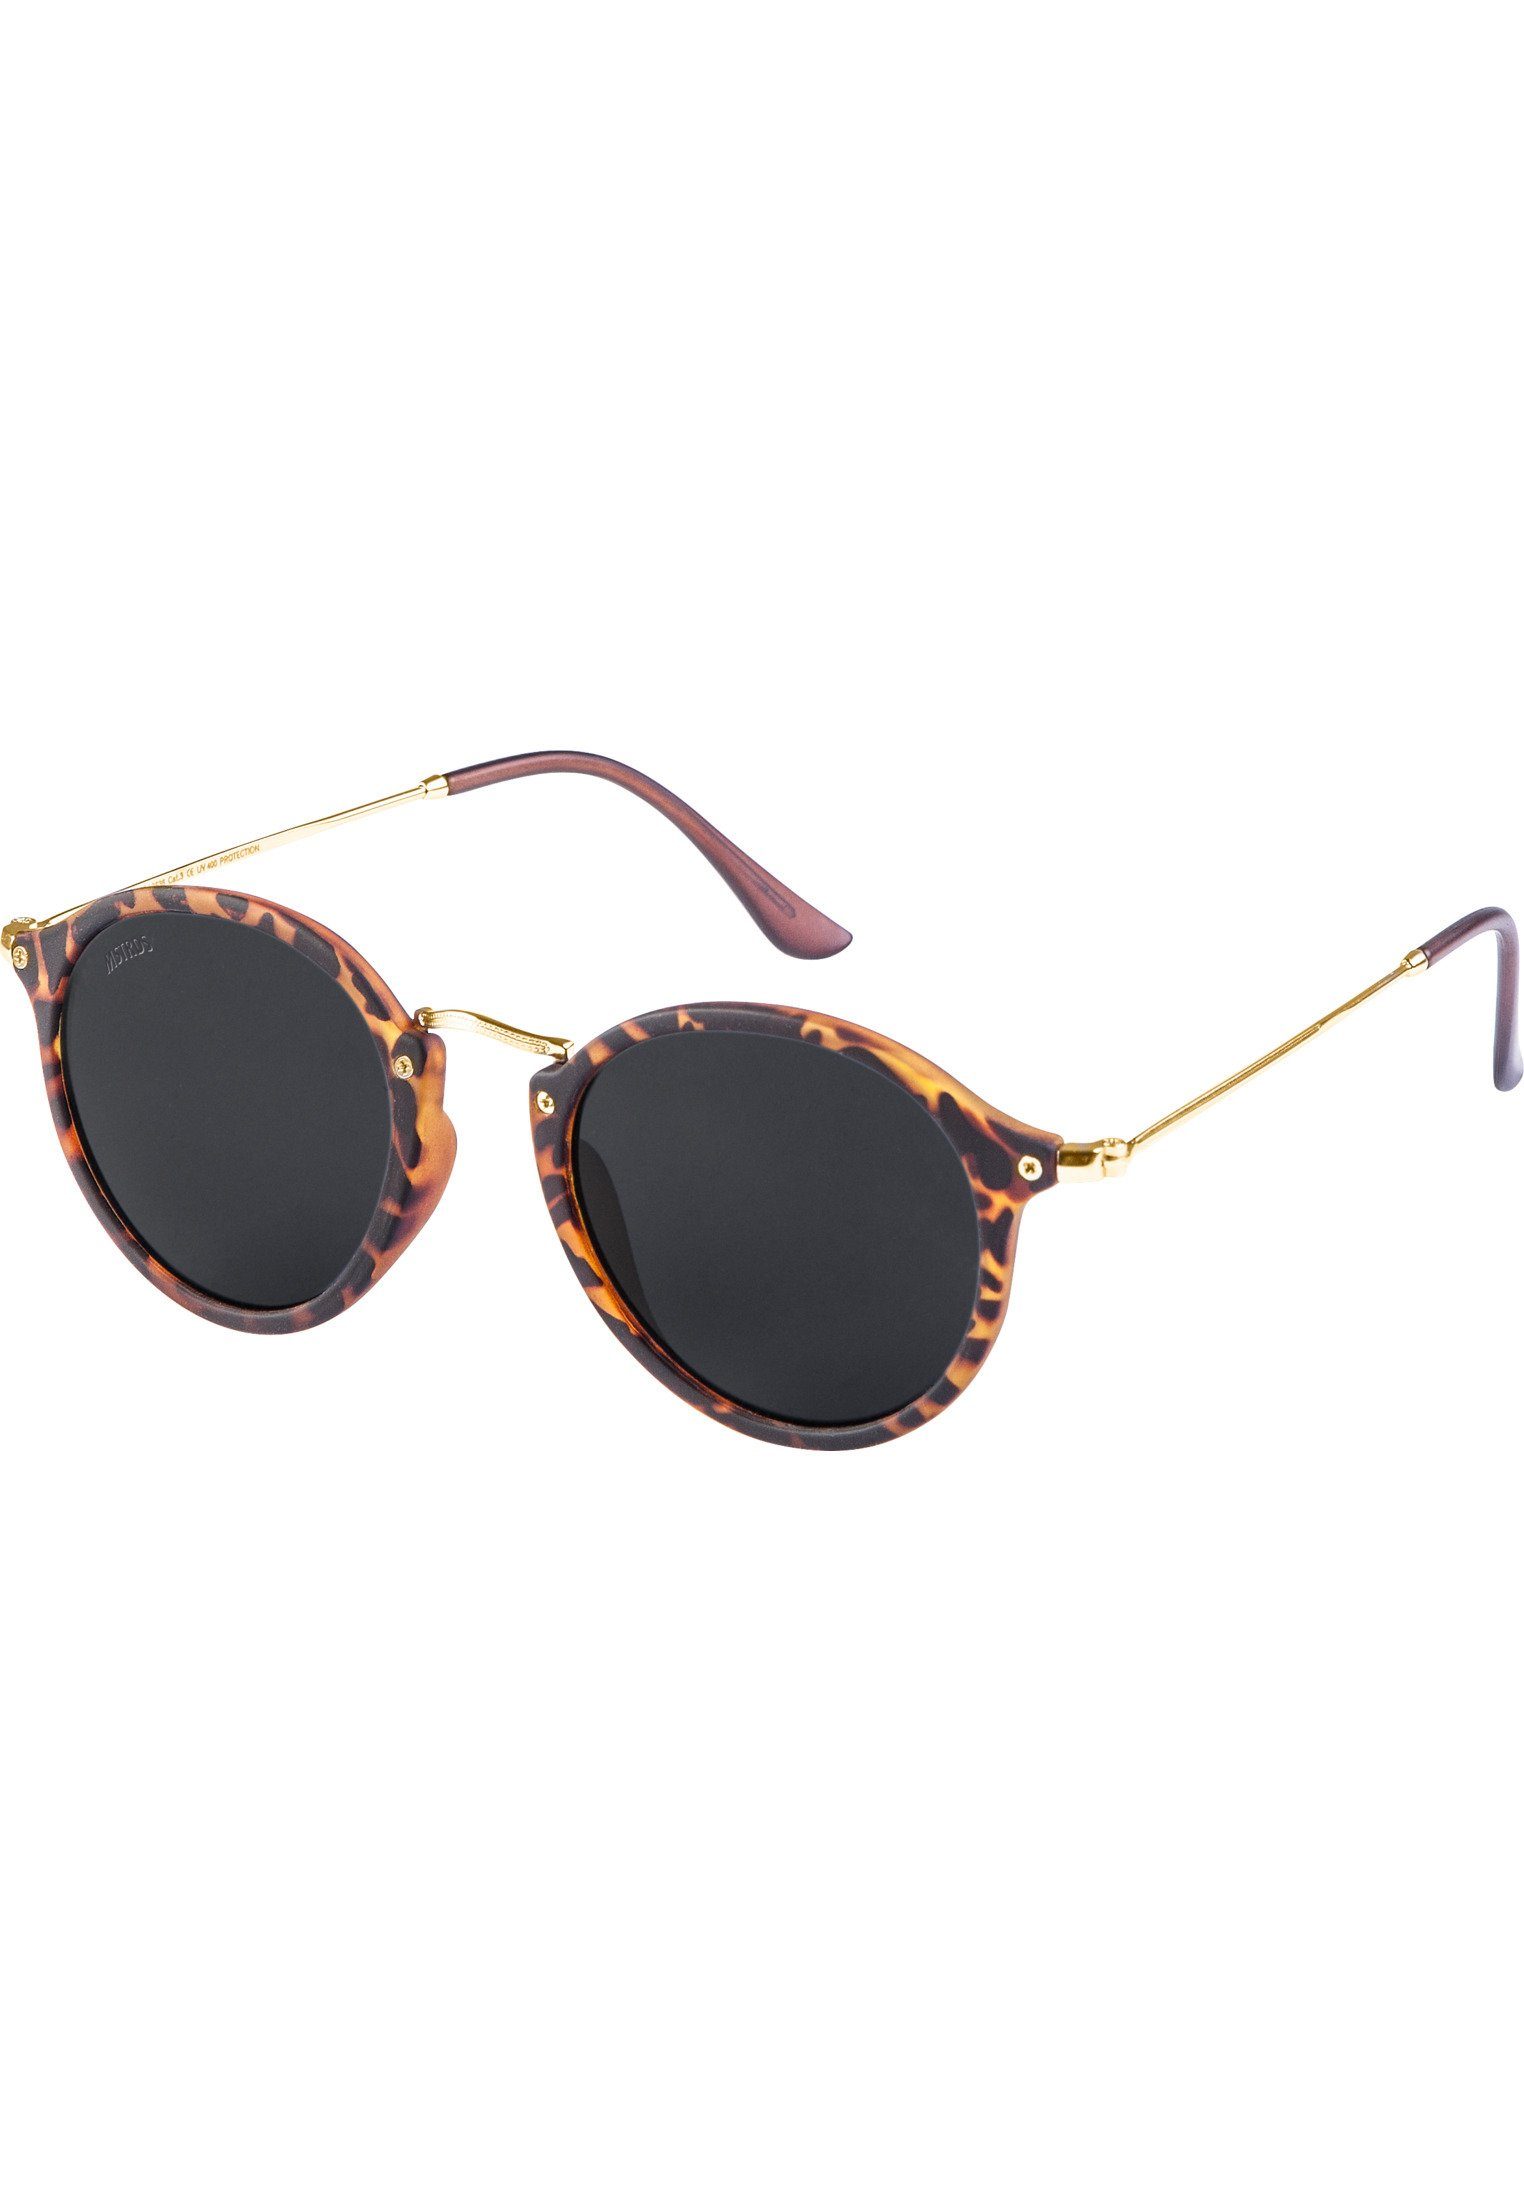 havanna/grey Sunglasses Spy MSTRDS Accessoires Sonnenbrille